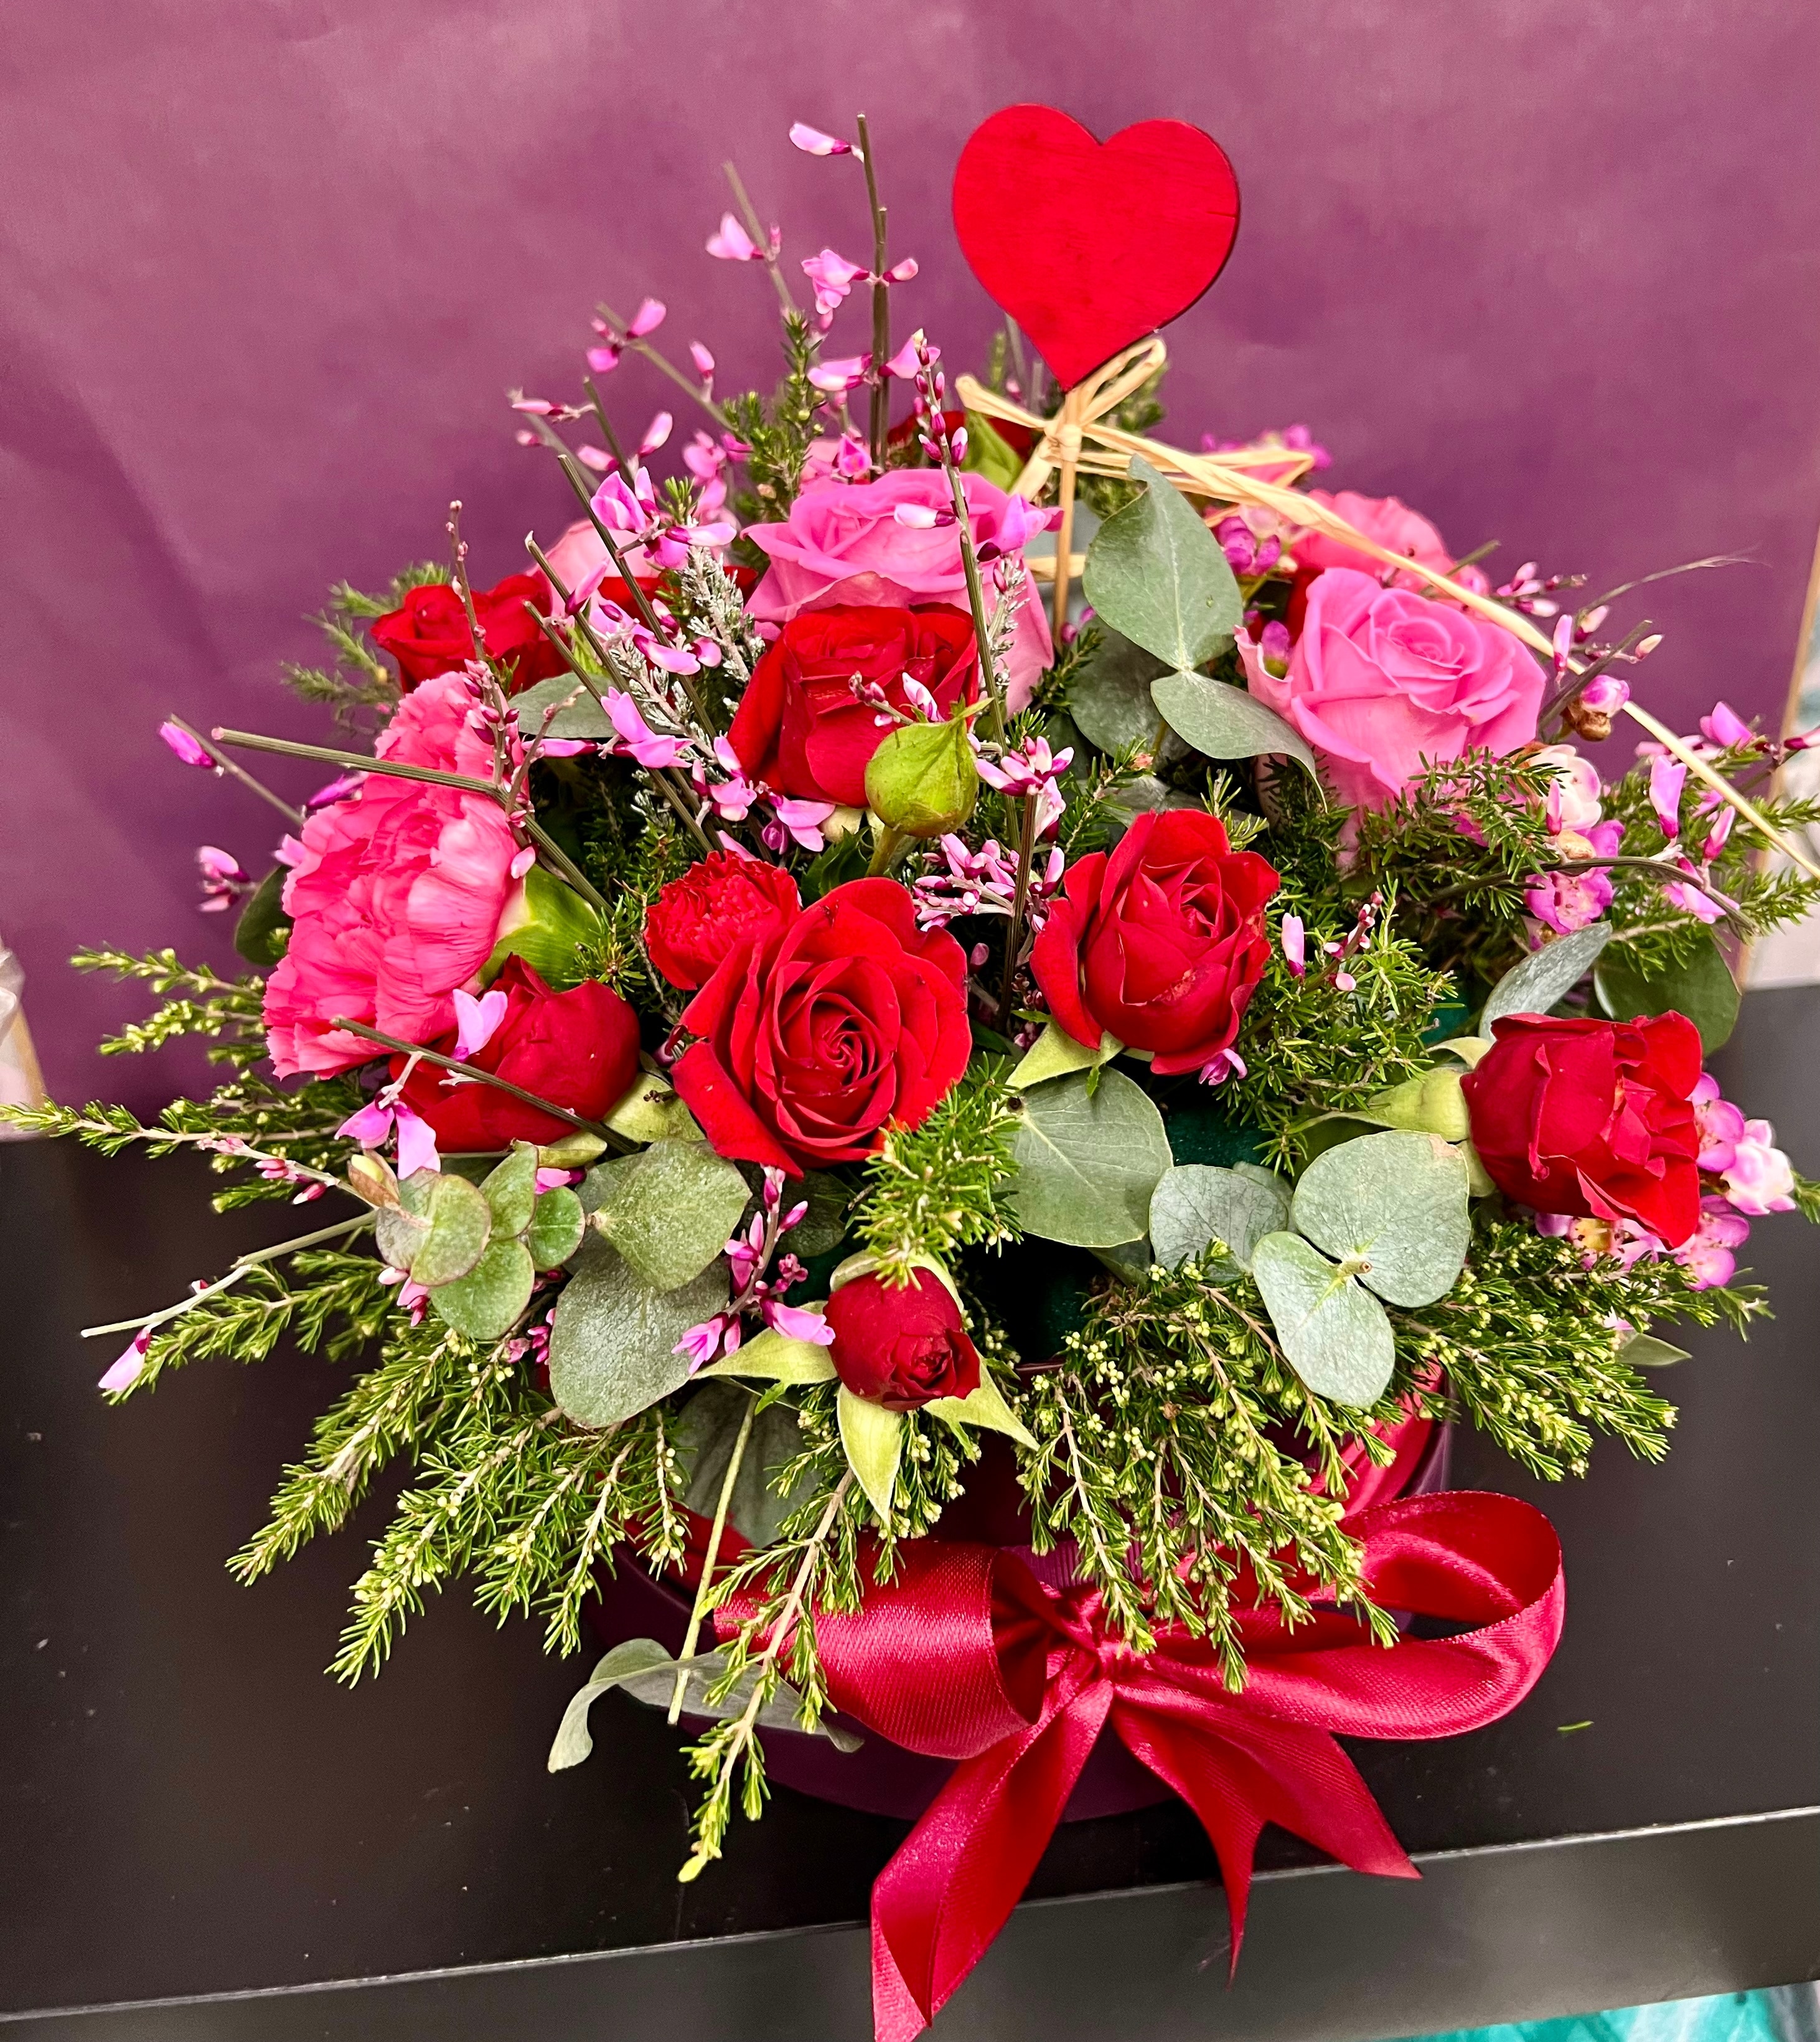 Red and Pink Rose Hatbox Flower Arrangement